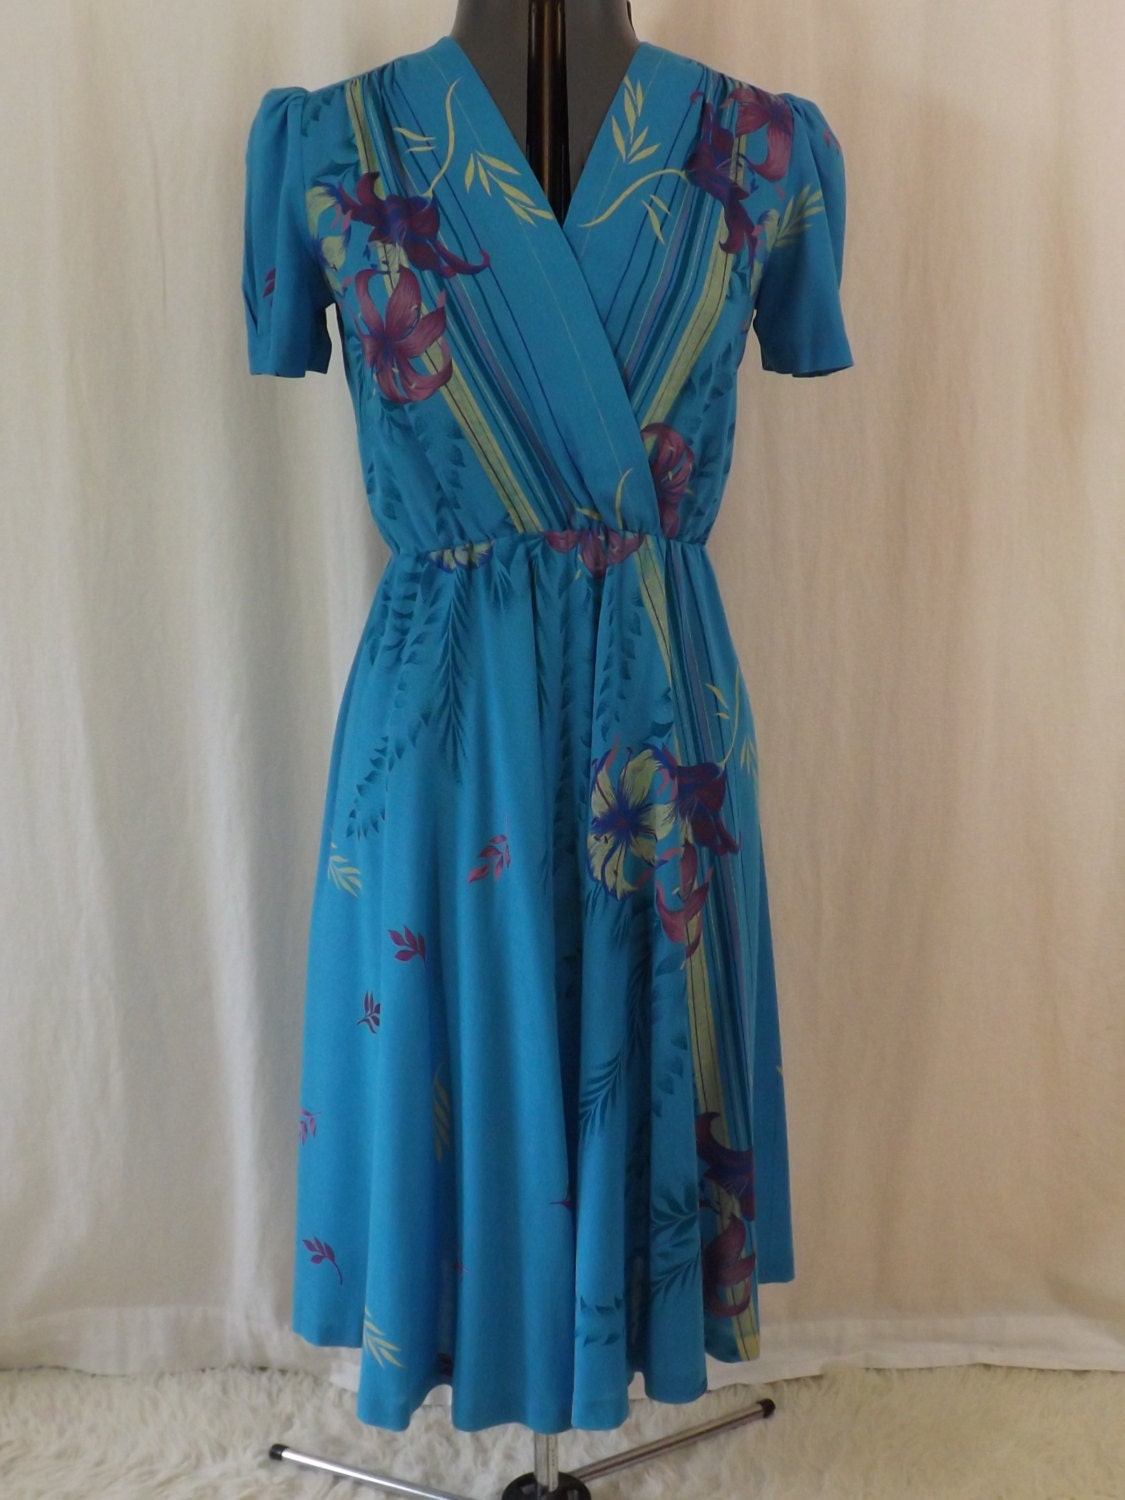 1970s JC PENNEY blue polyester & rayon floral dress